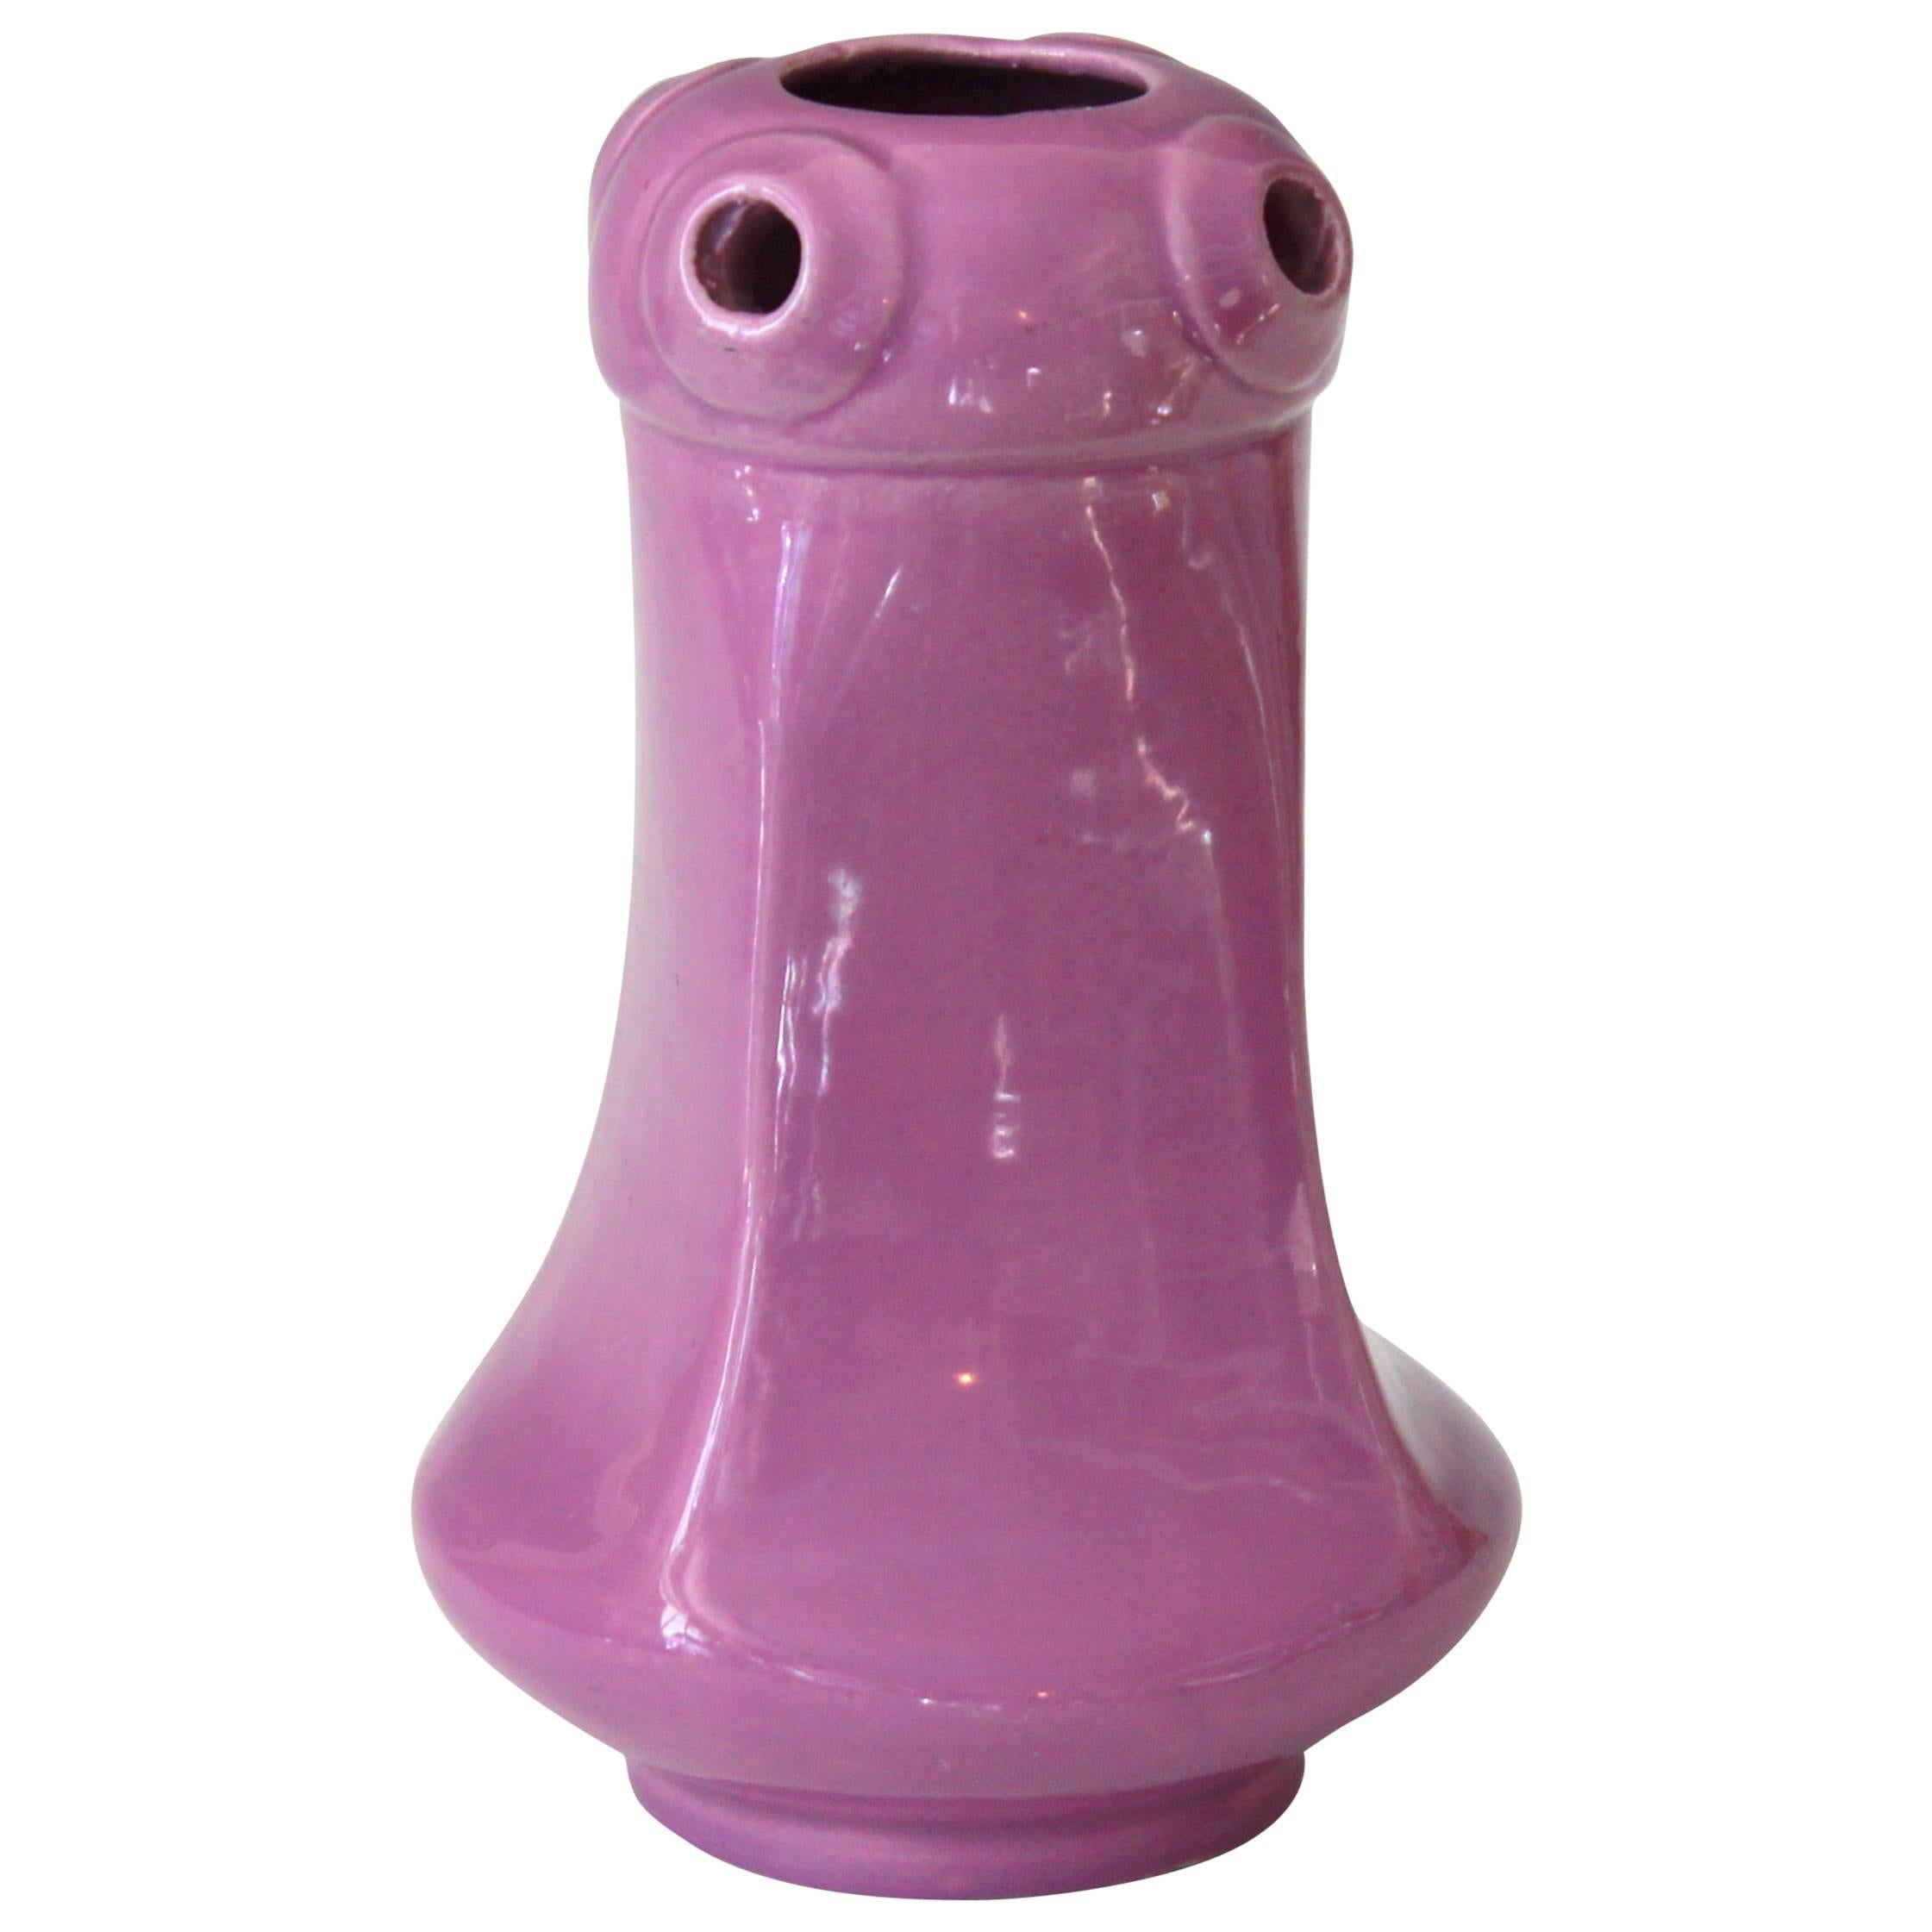 Awaji Pottery Art Deco Vase in Pink Glaze For Sale